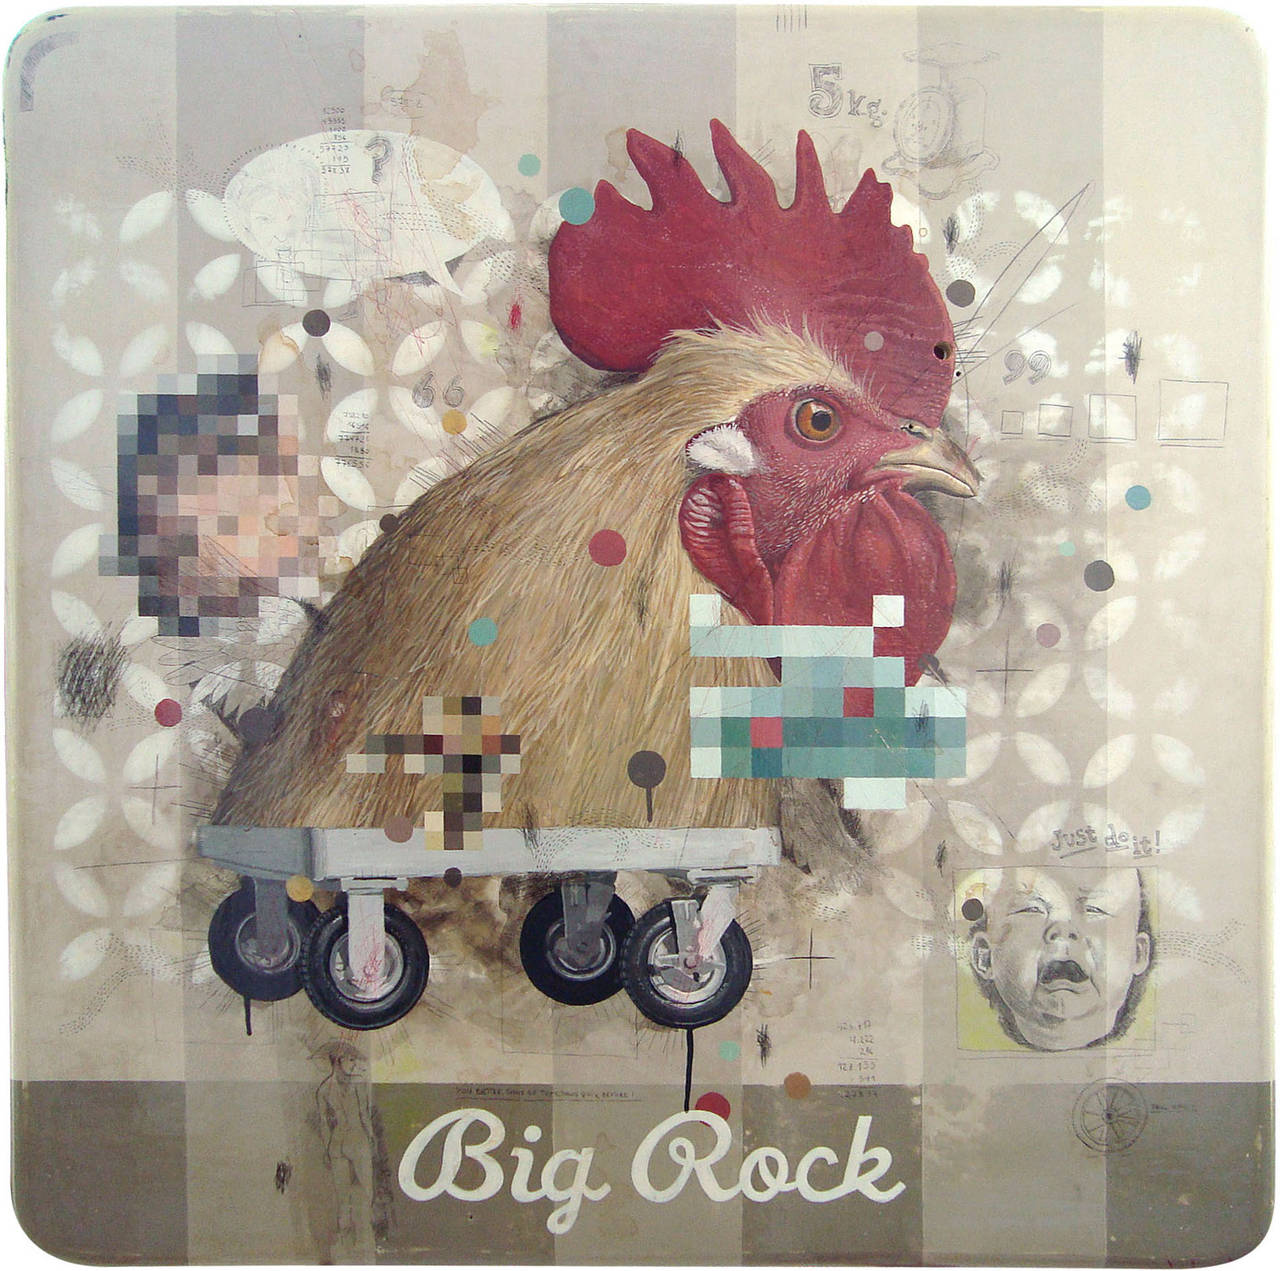 "Big Rock" Photorealism & Surrealist Style Painting Mixed Media on Wood Board